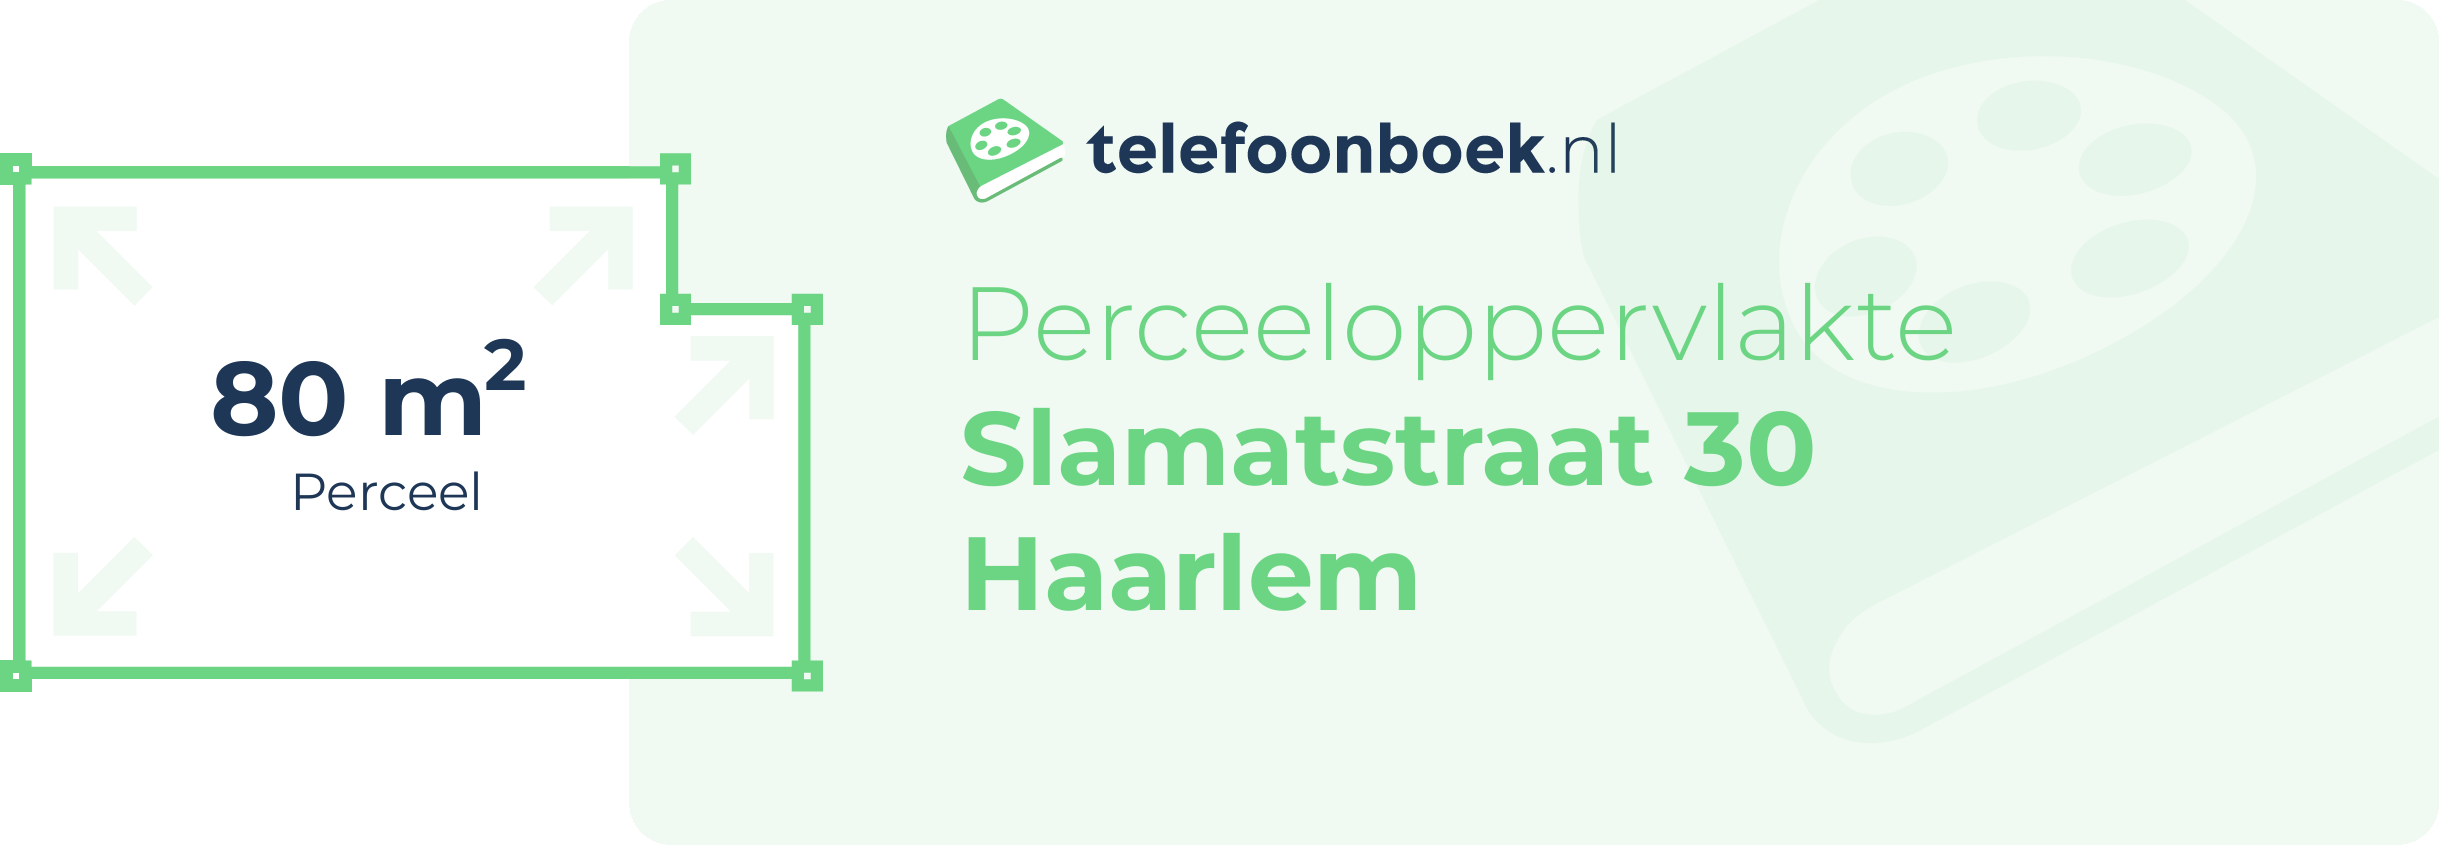 Perceeloppervlakte Slamatstraat 30 Haarlem